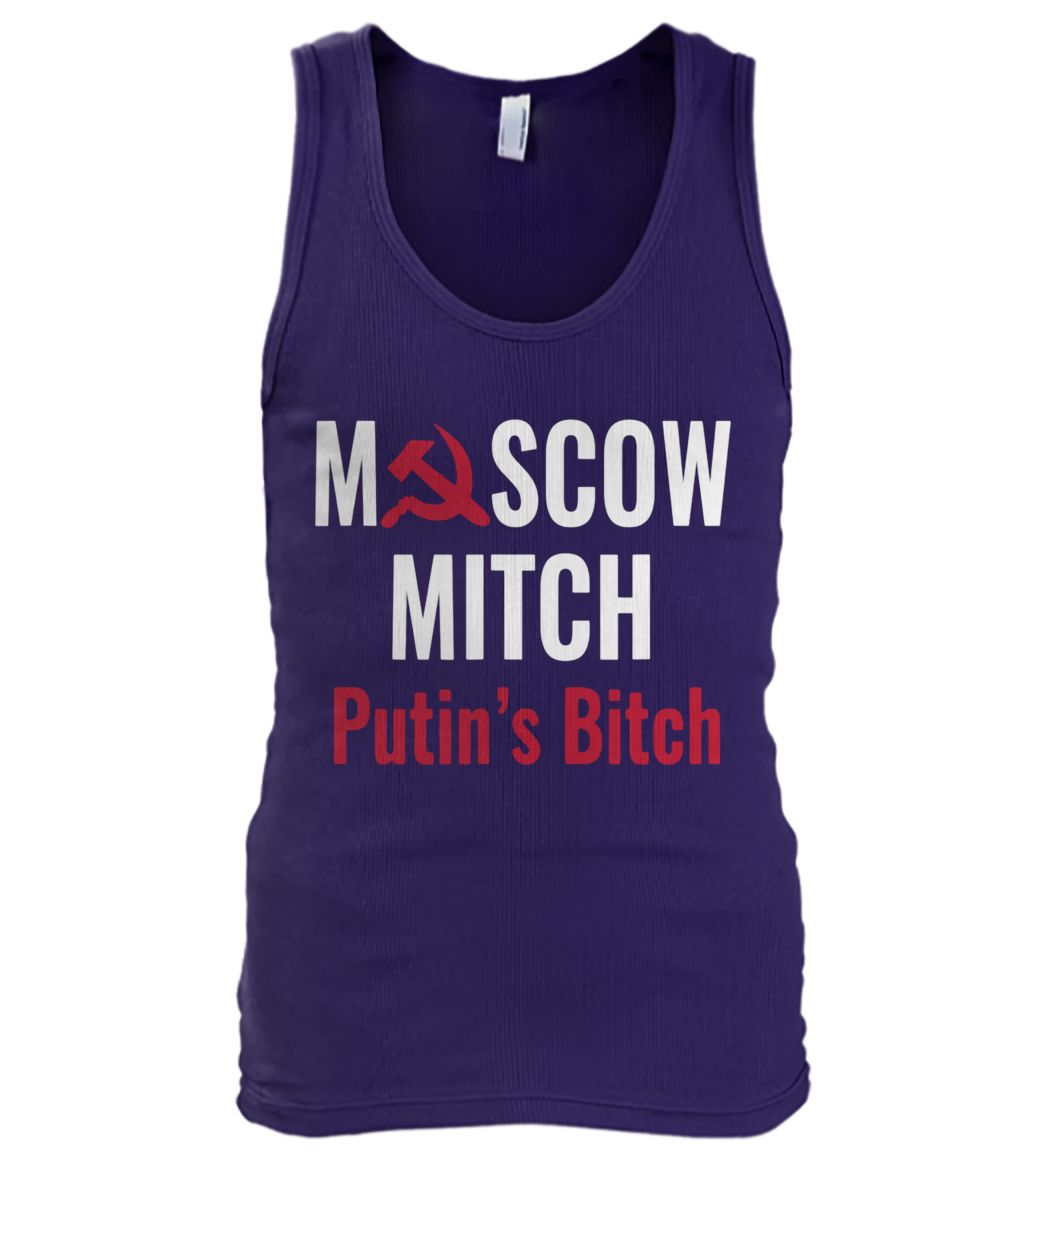 Moscow mitch putin's bitch men's tank top